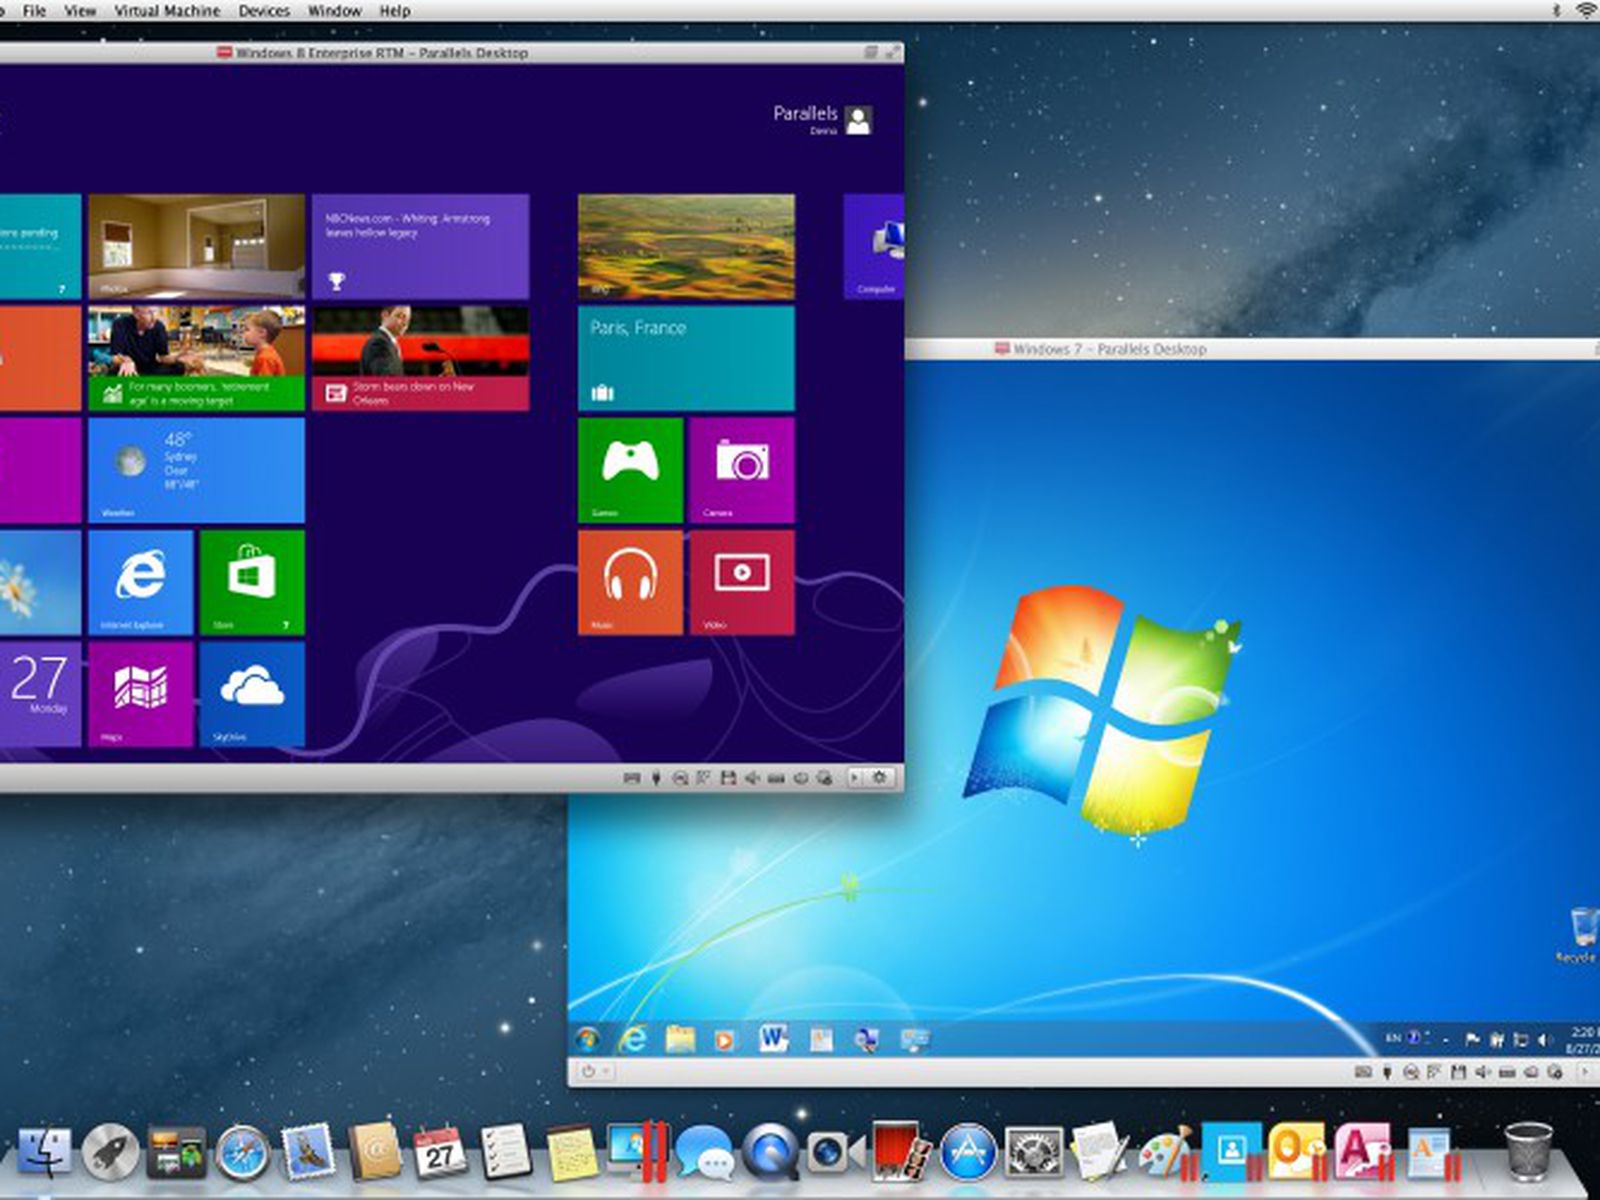 parallels desktop 9 for mac vm windows